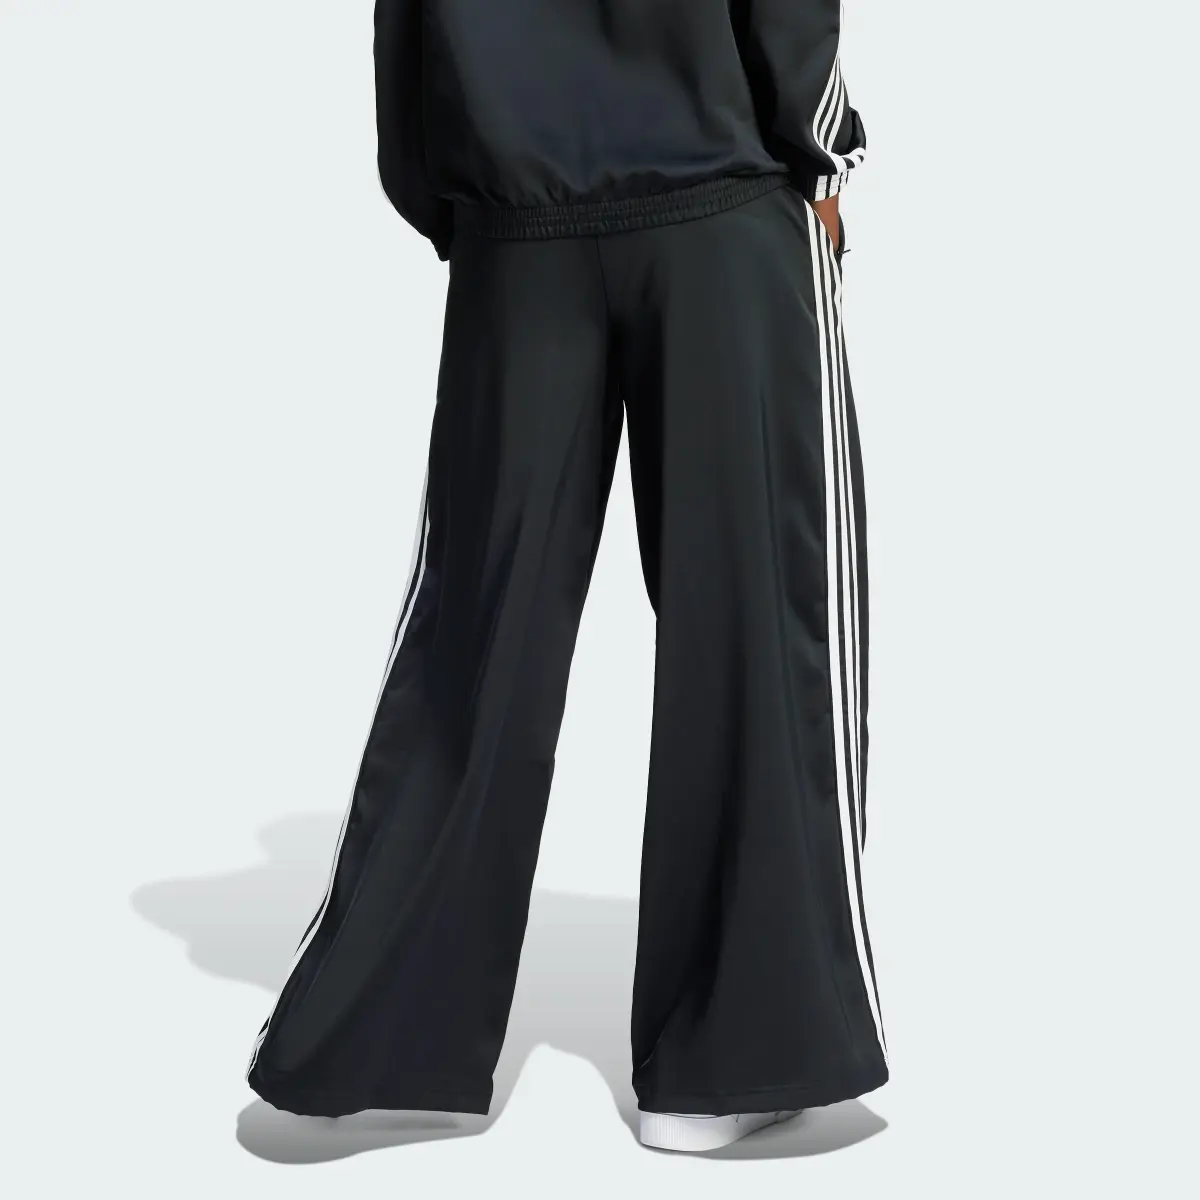 Adidas Pantalon de survêtement large satin. 2